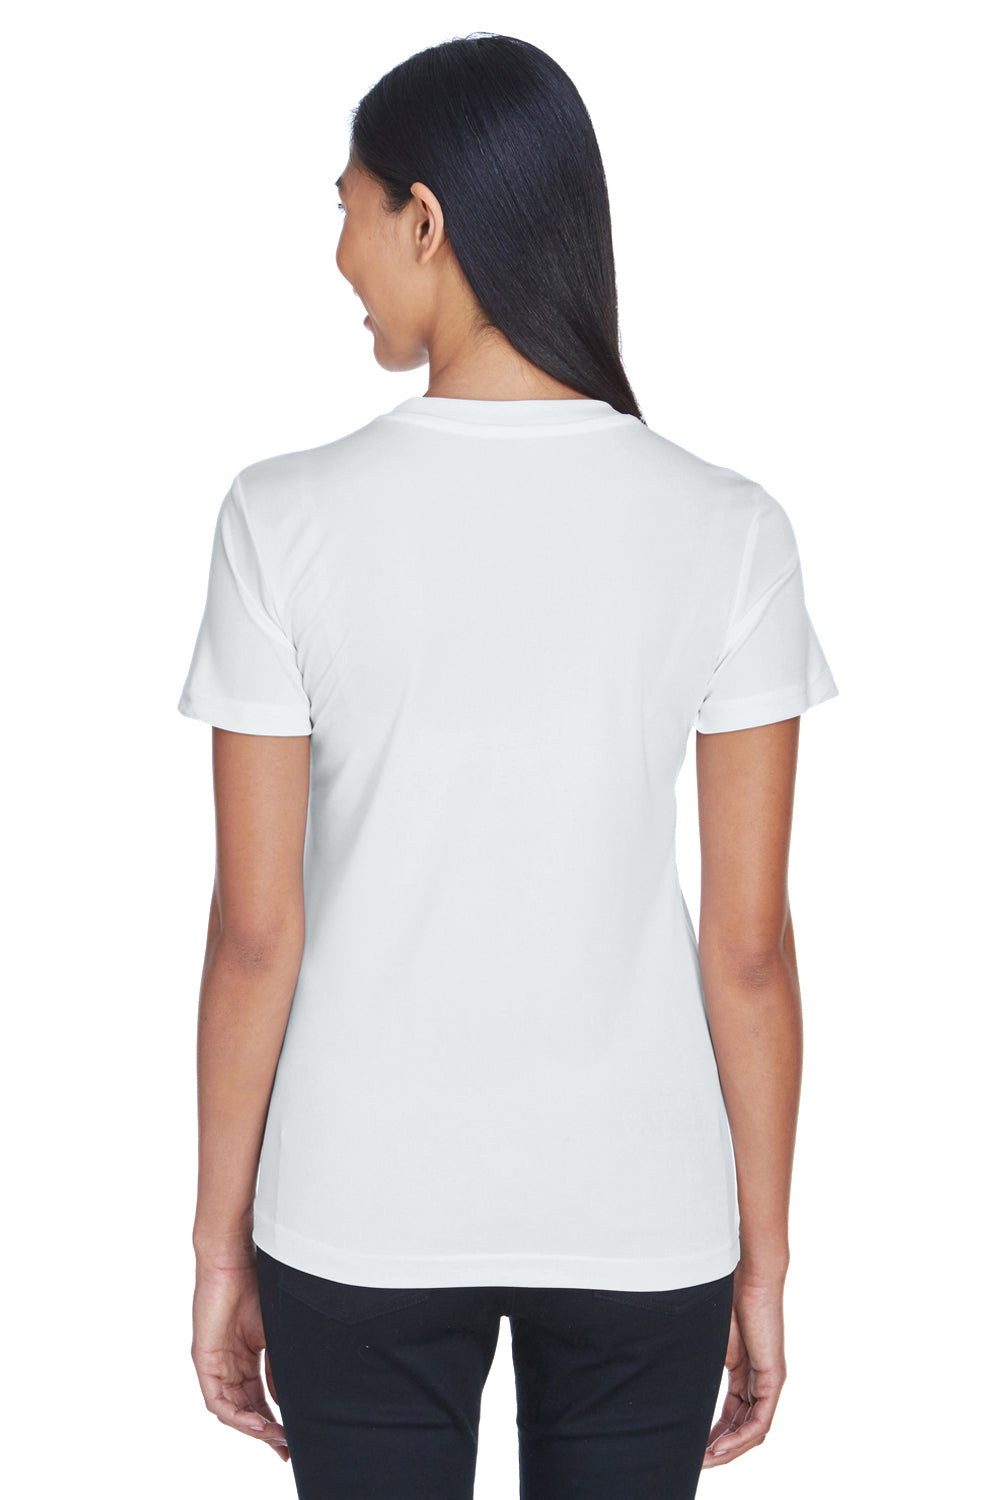 UltraClub 8620L Womens Cool & Dry Performance Moisture Wicking Short Sleeve Crewneck T-Shirt White Back